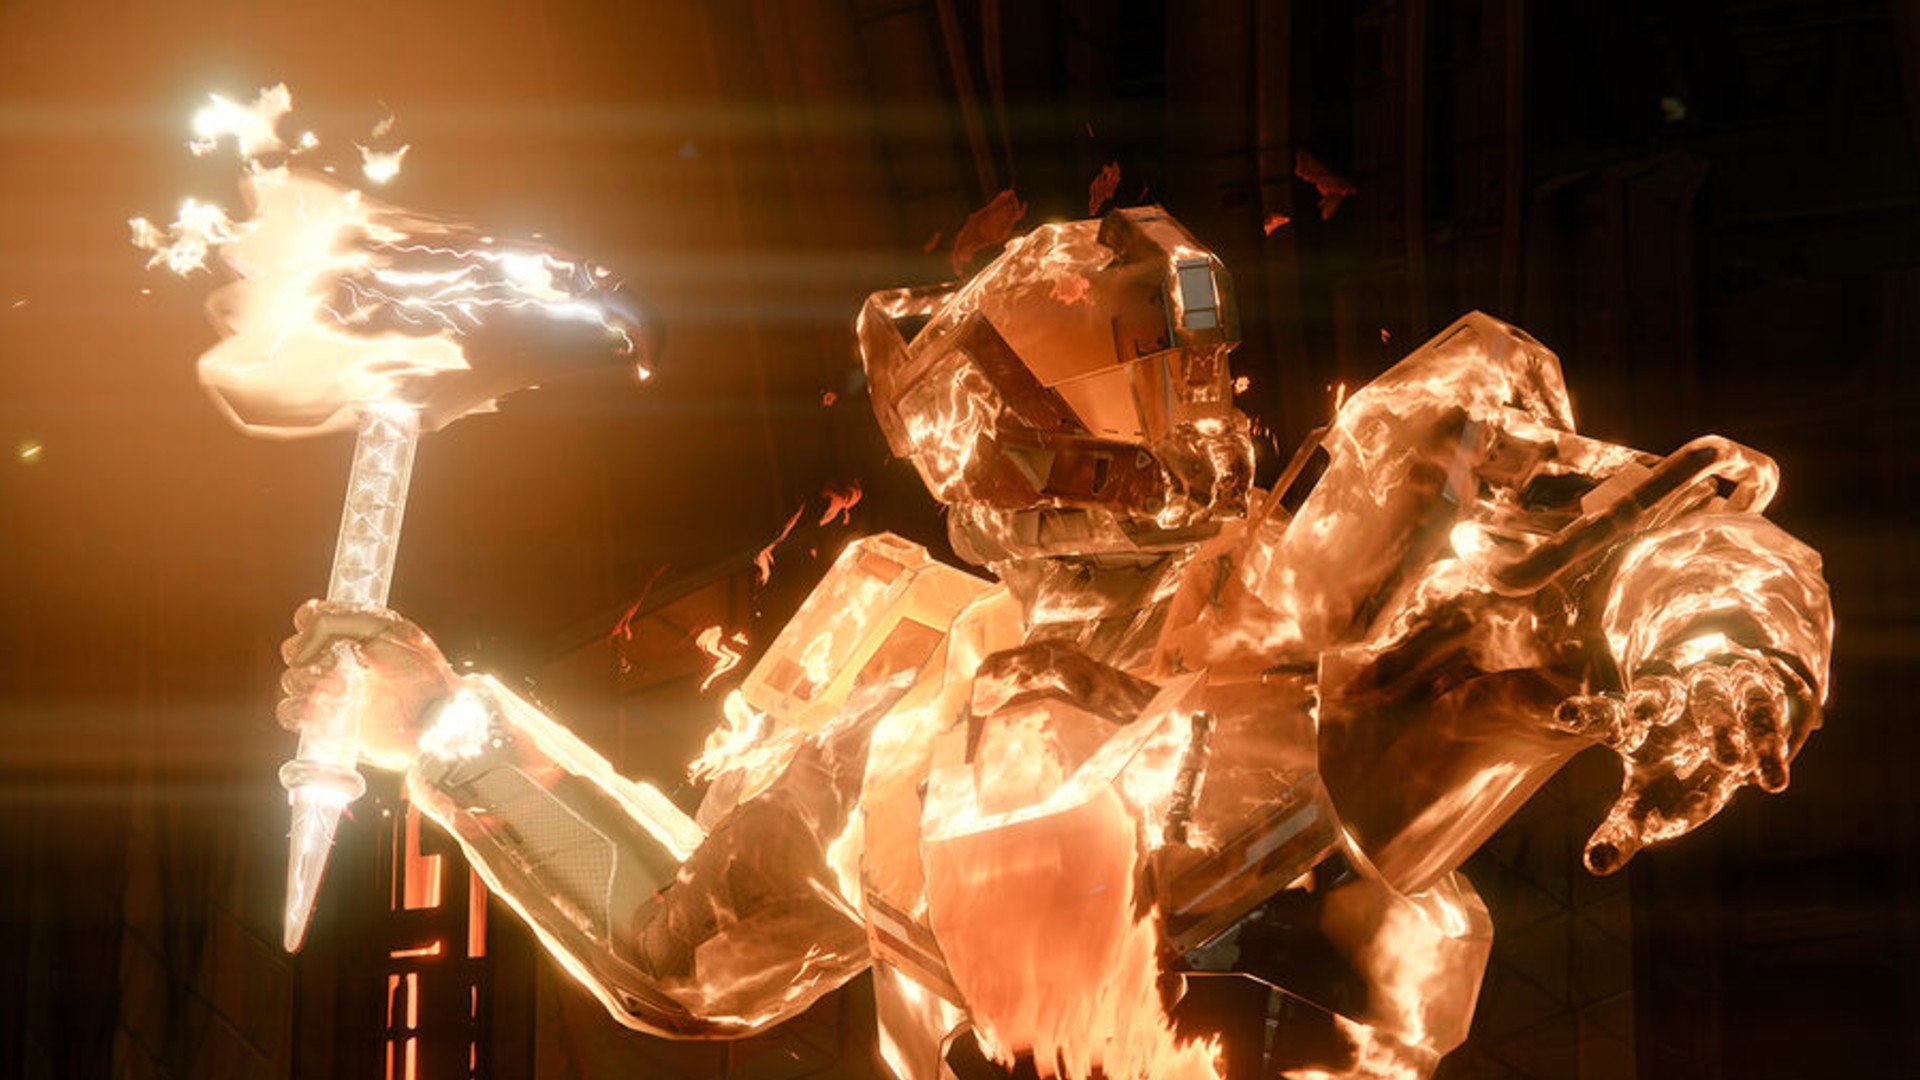  Destiny 2 player discovers highest DPS, one-shotting toughest raid boss solo 